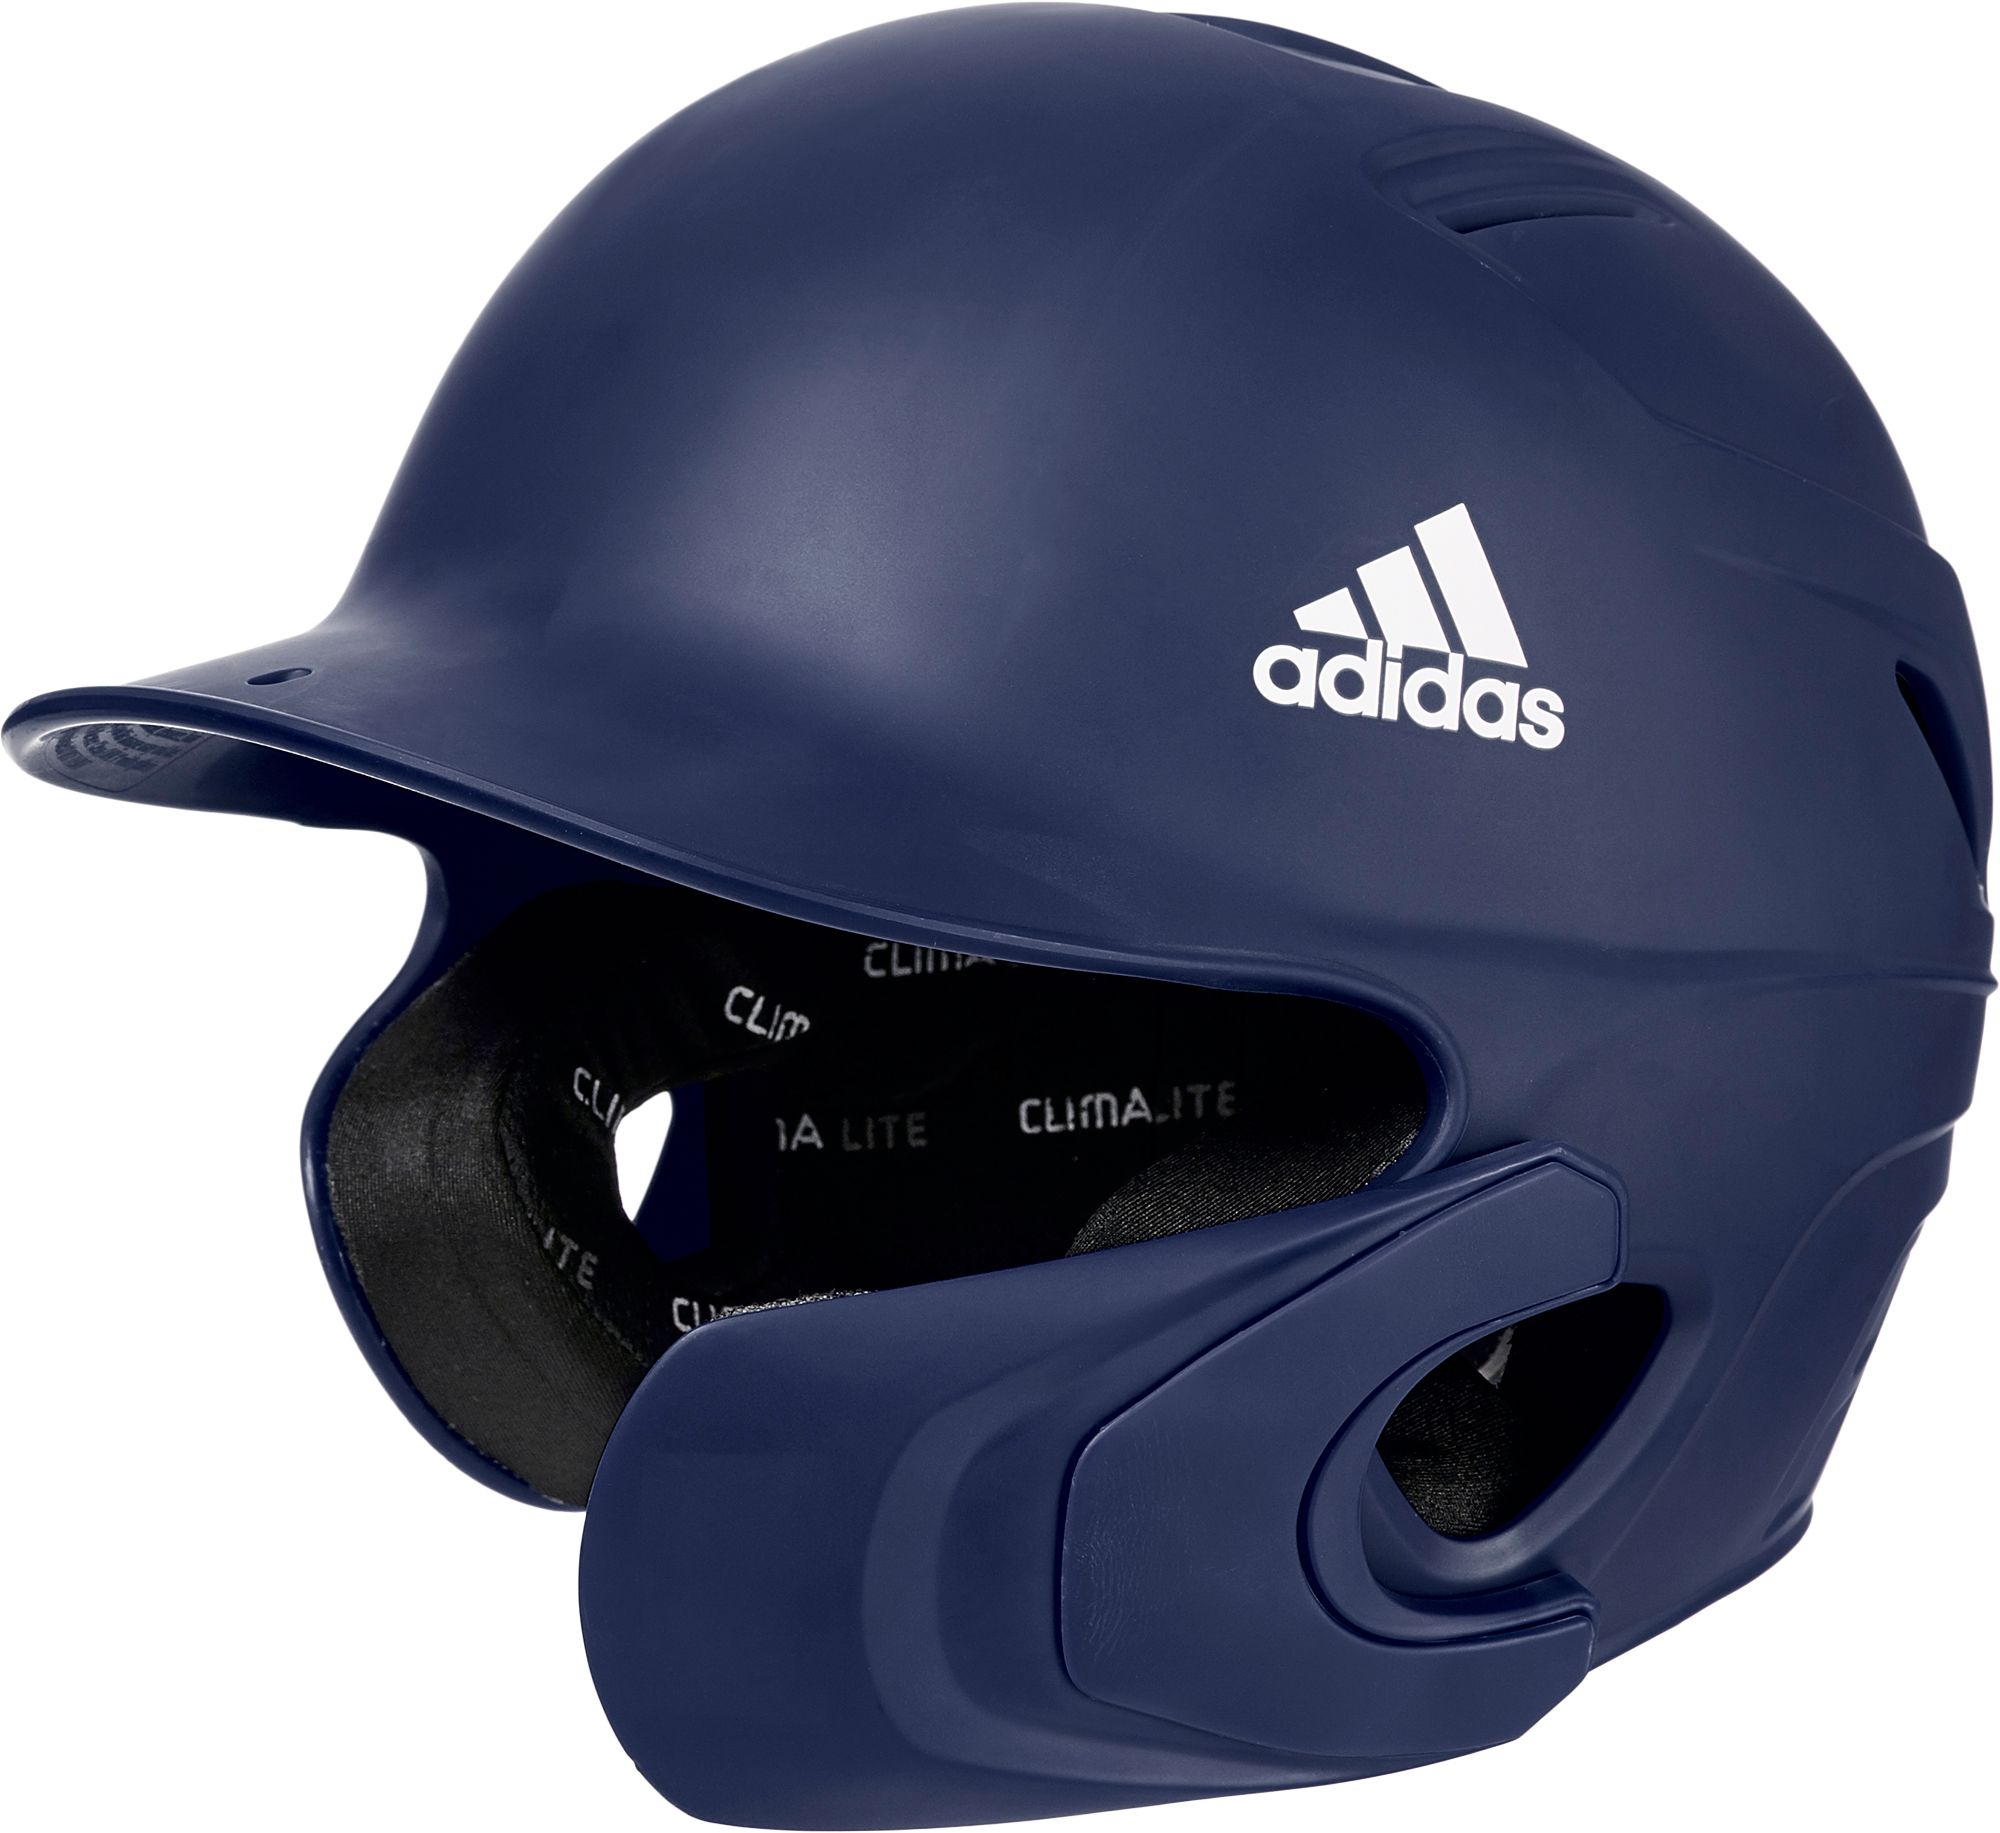 adidas triple stripe batting helmet